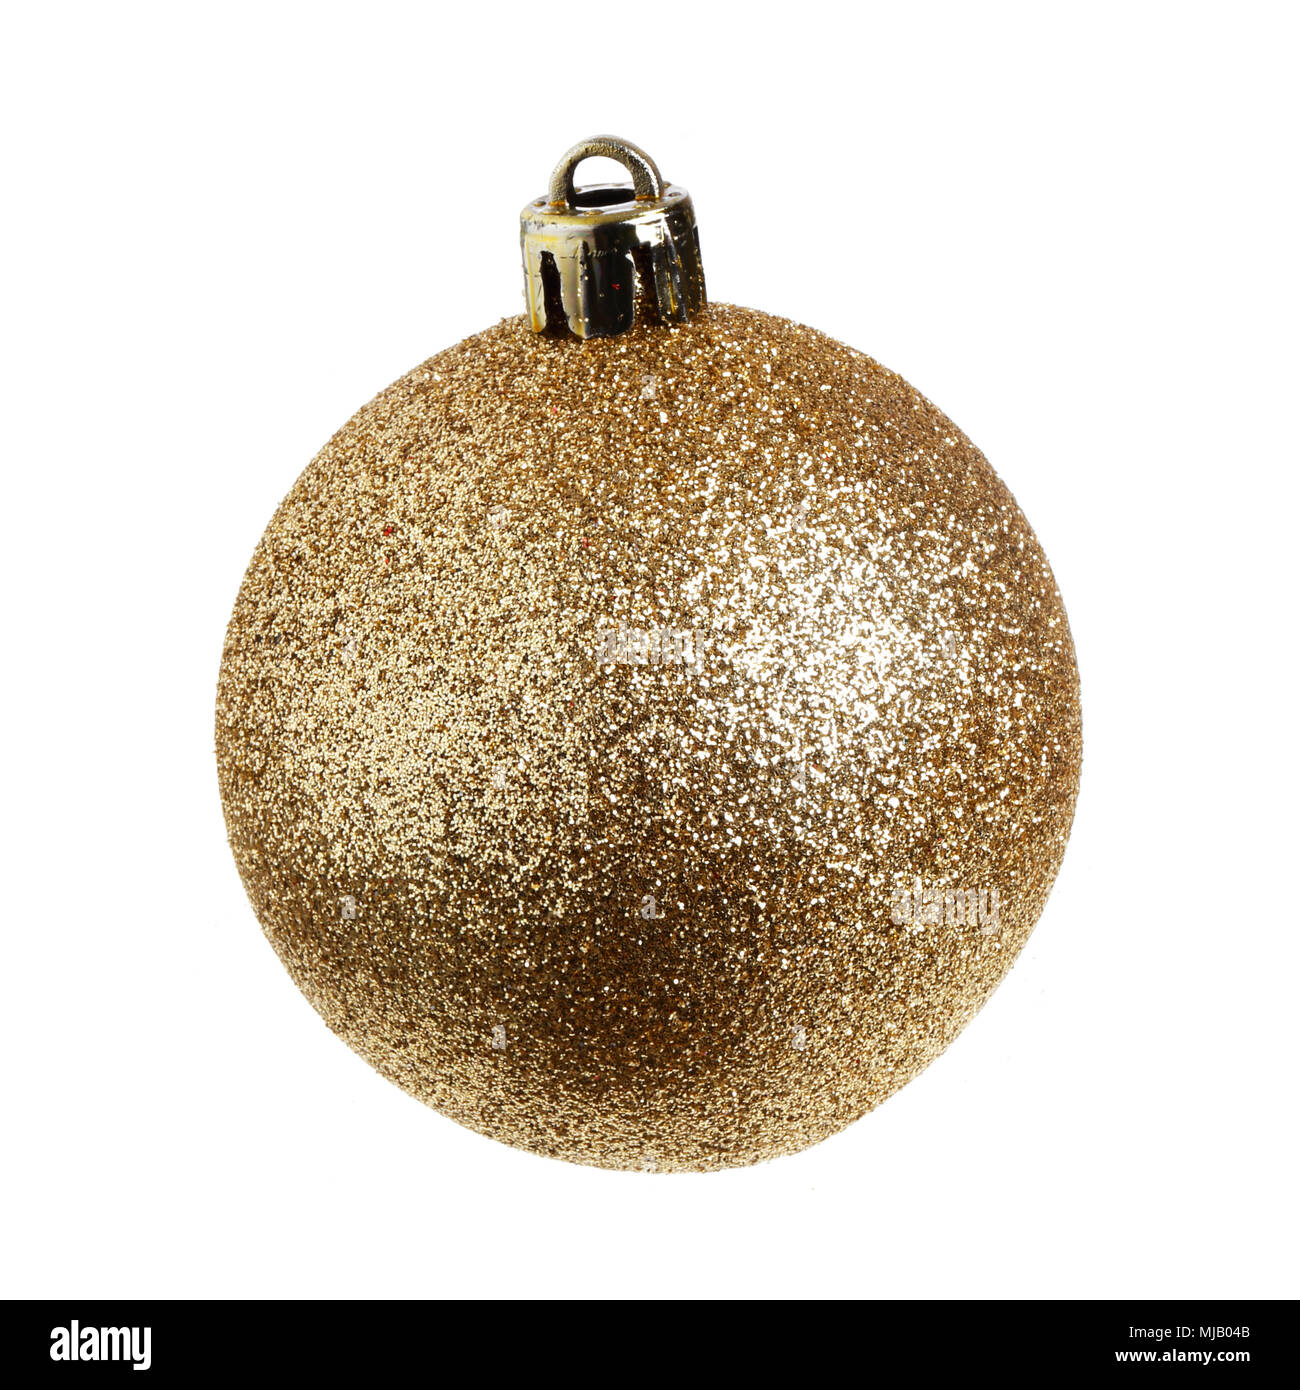 Golden Christmas ball isolated on white background. Stock Photo